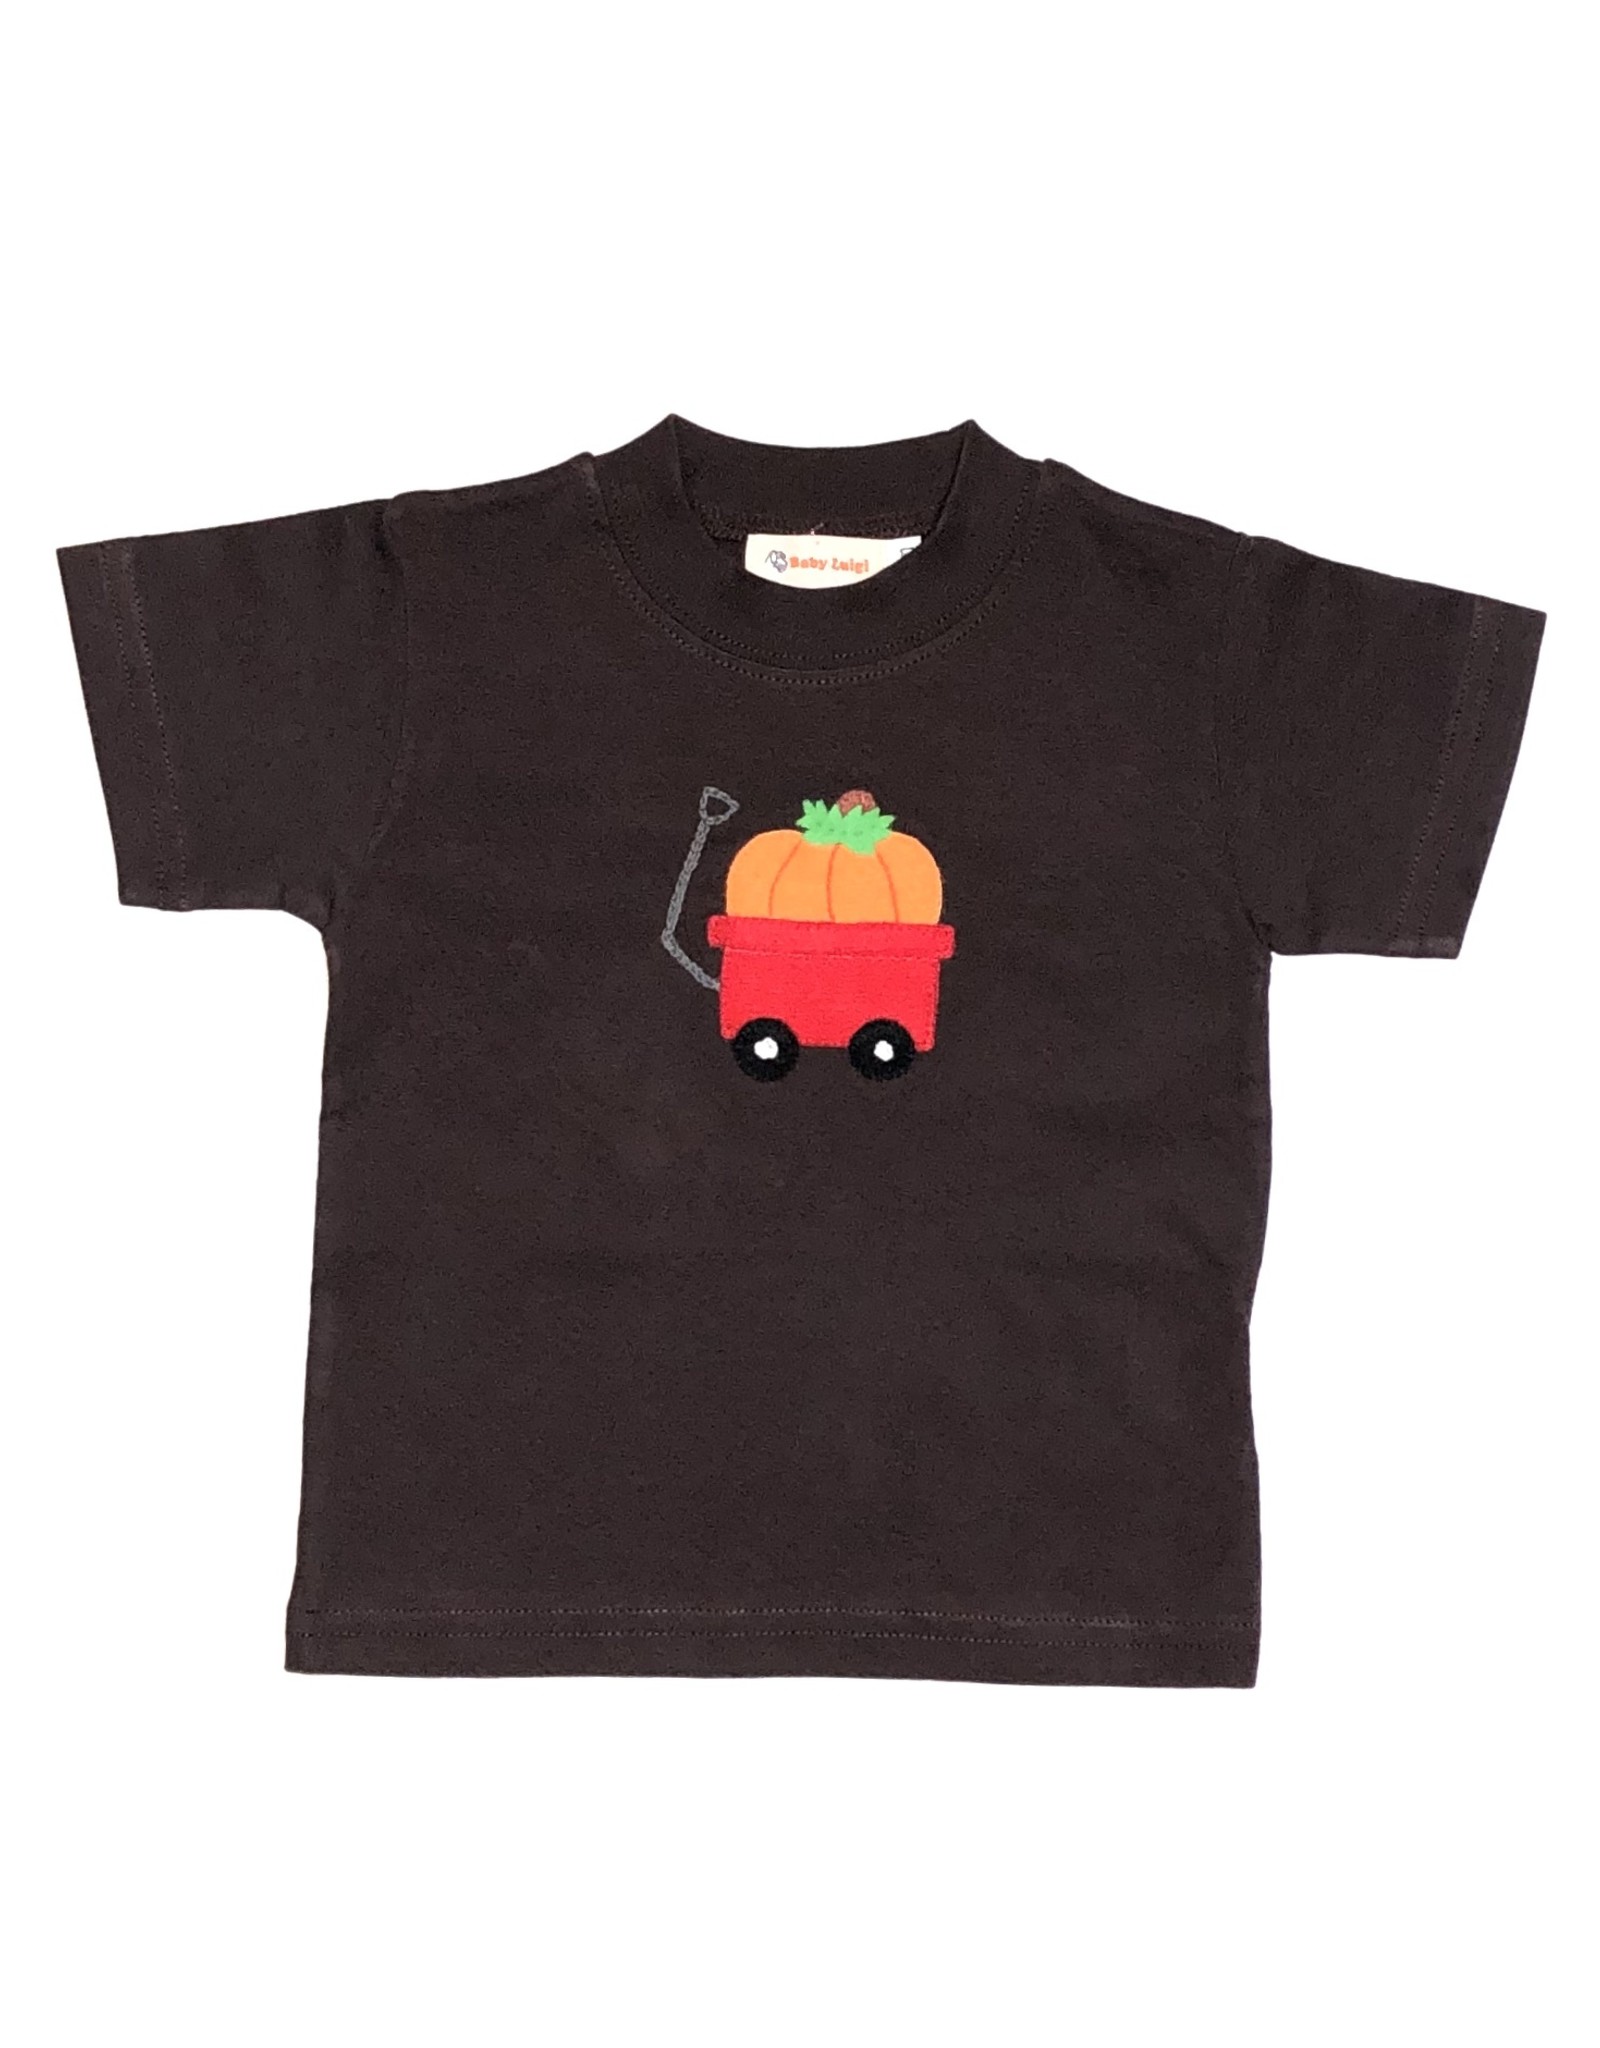 Luigi F20 Luigi Boy S/S Shirt Wagon/Pumpkin